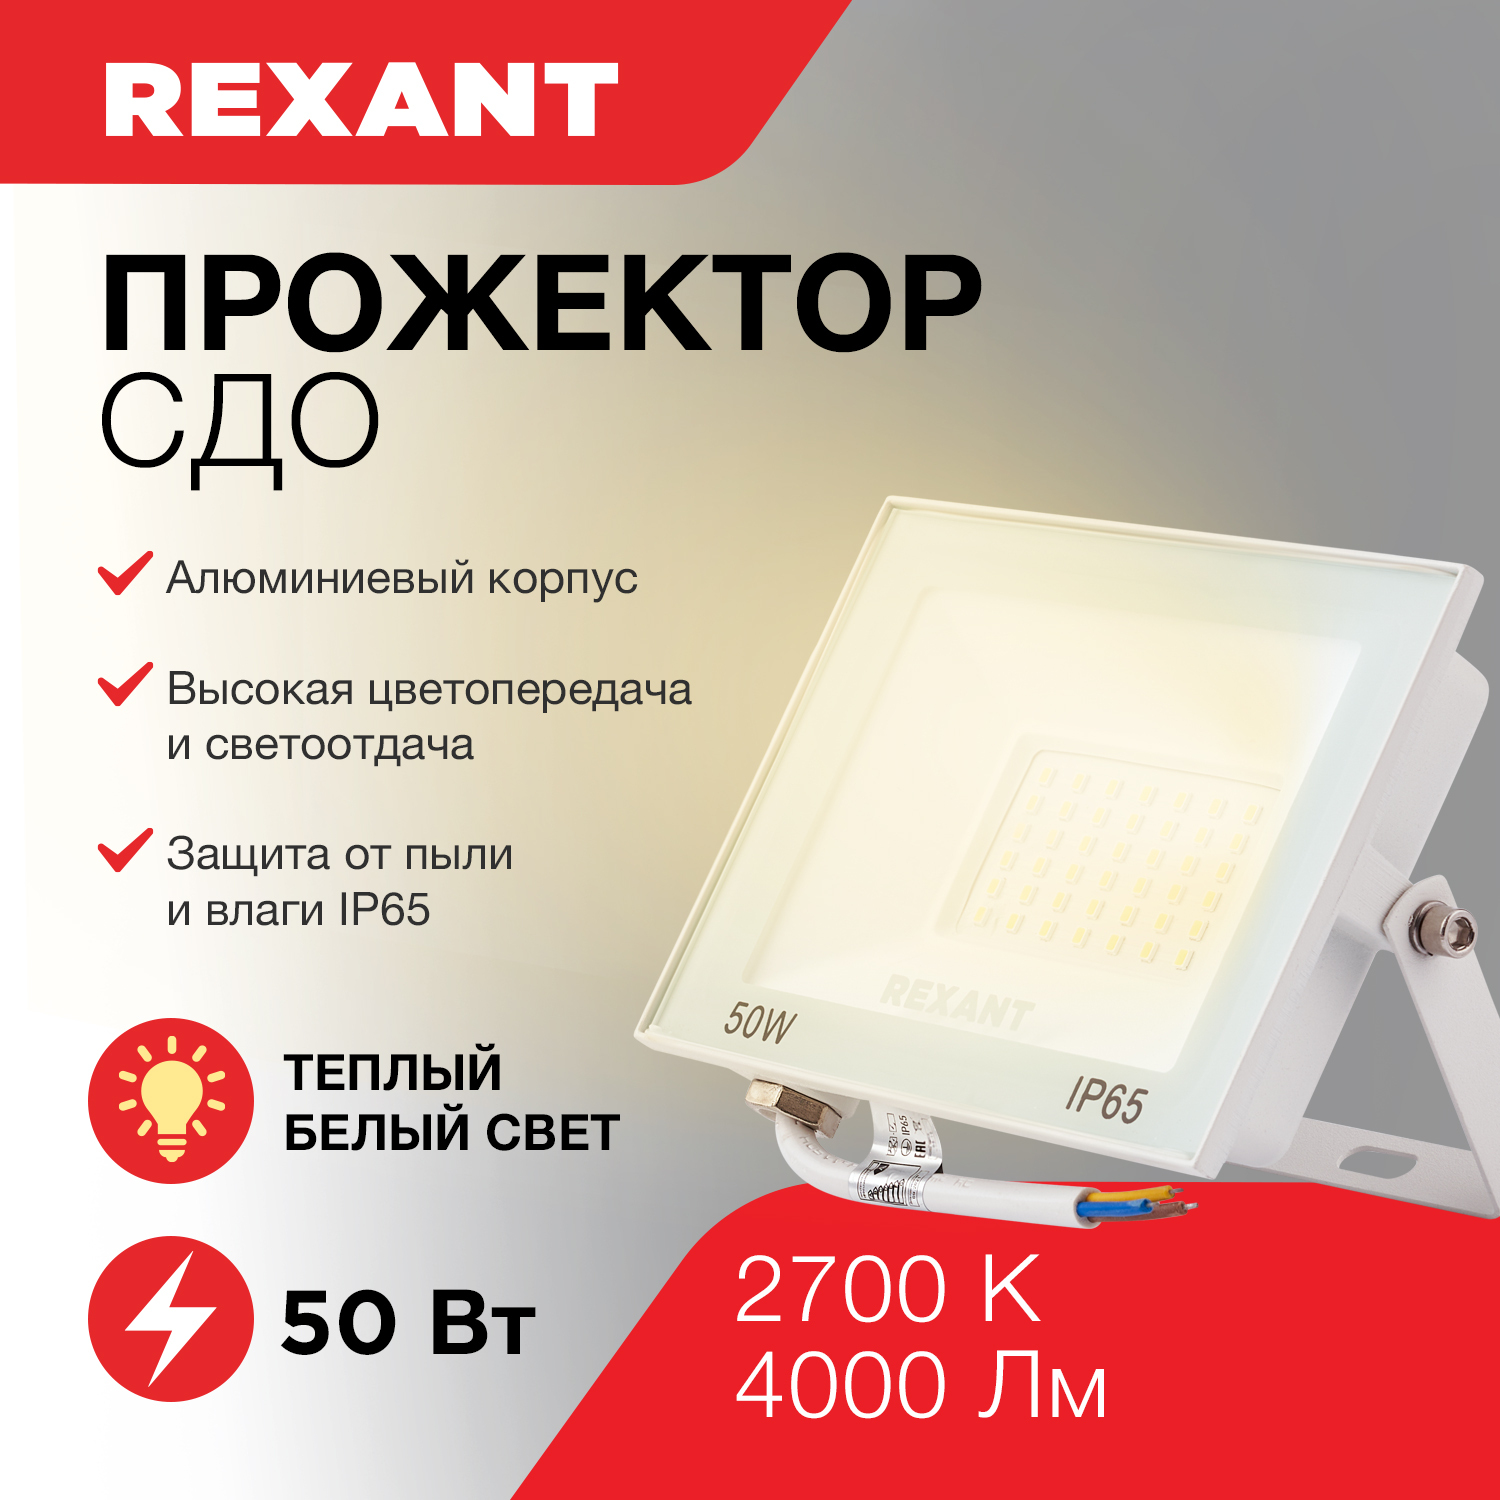 Прожекторы rexant